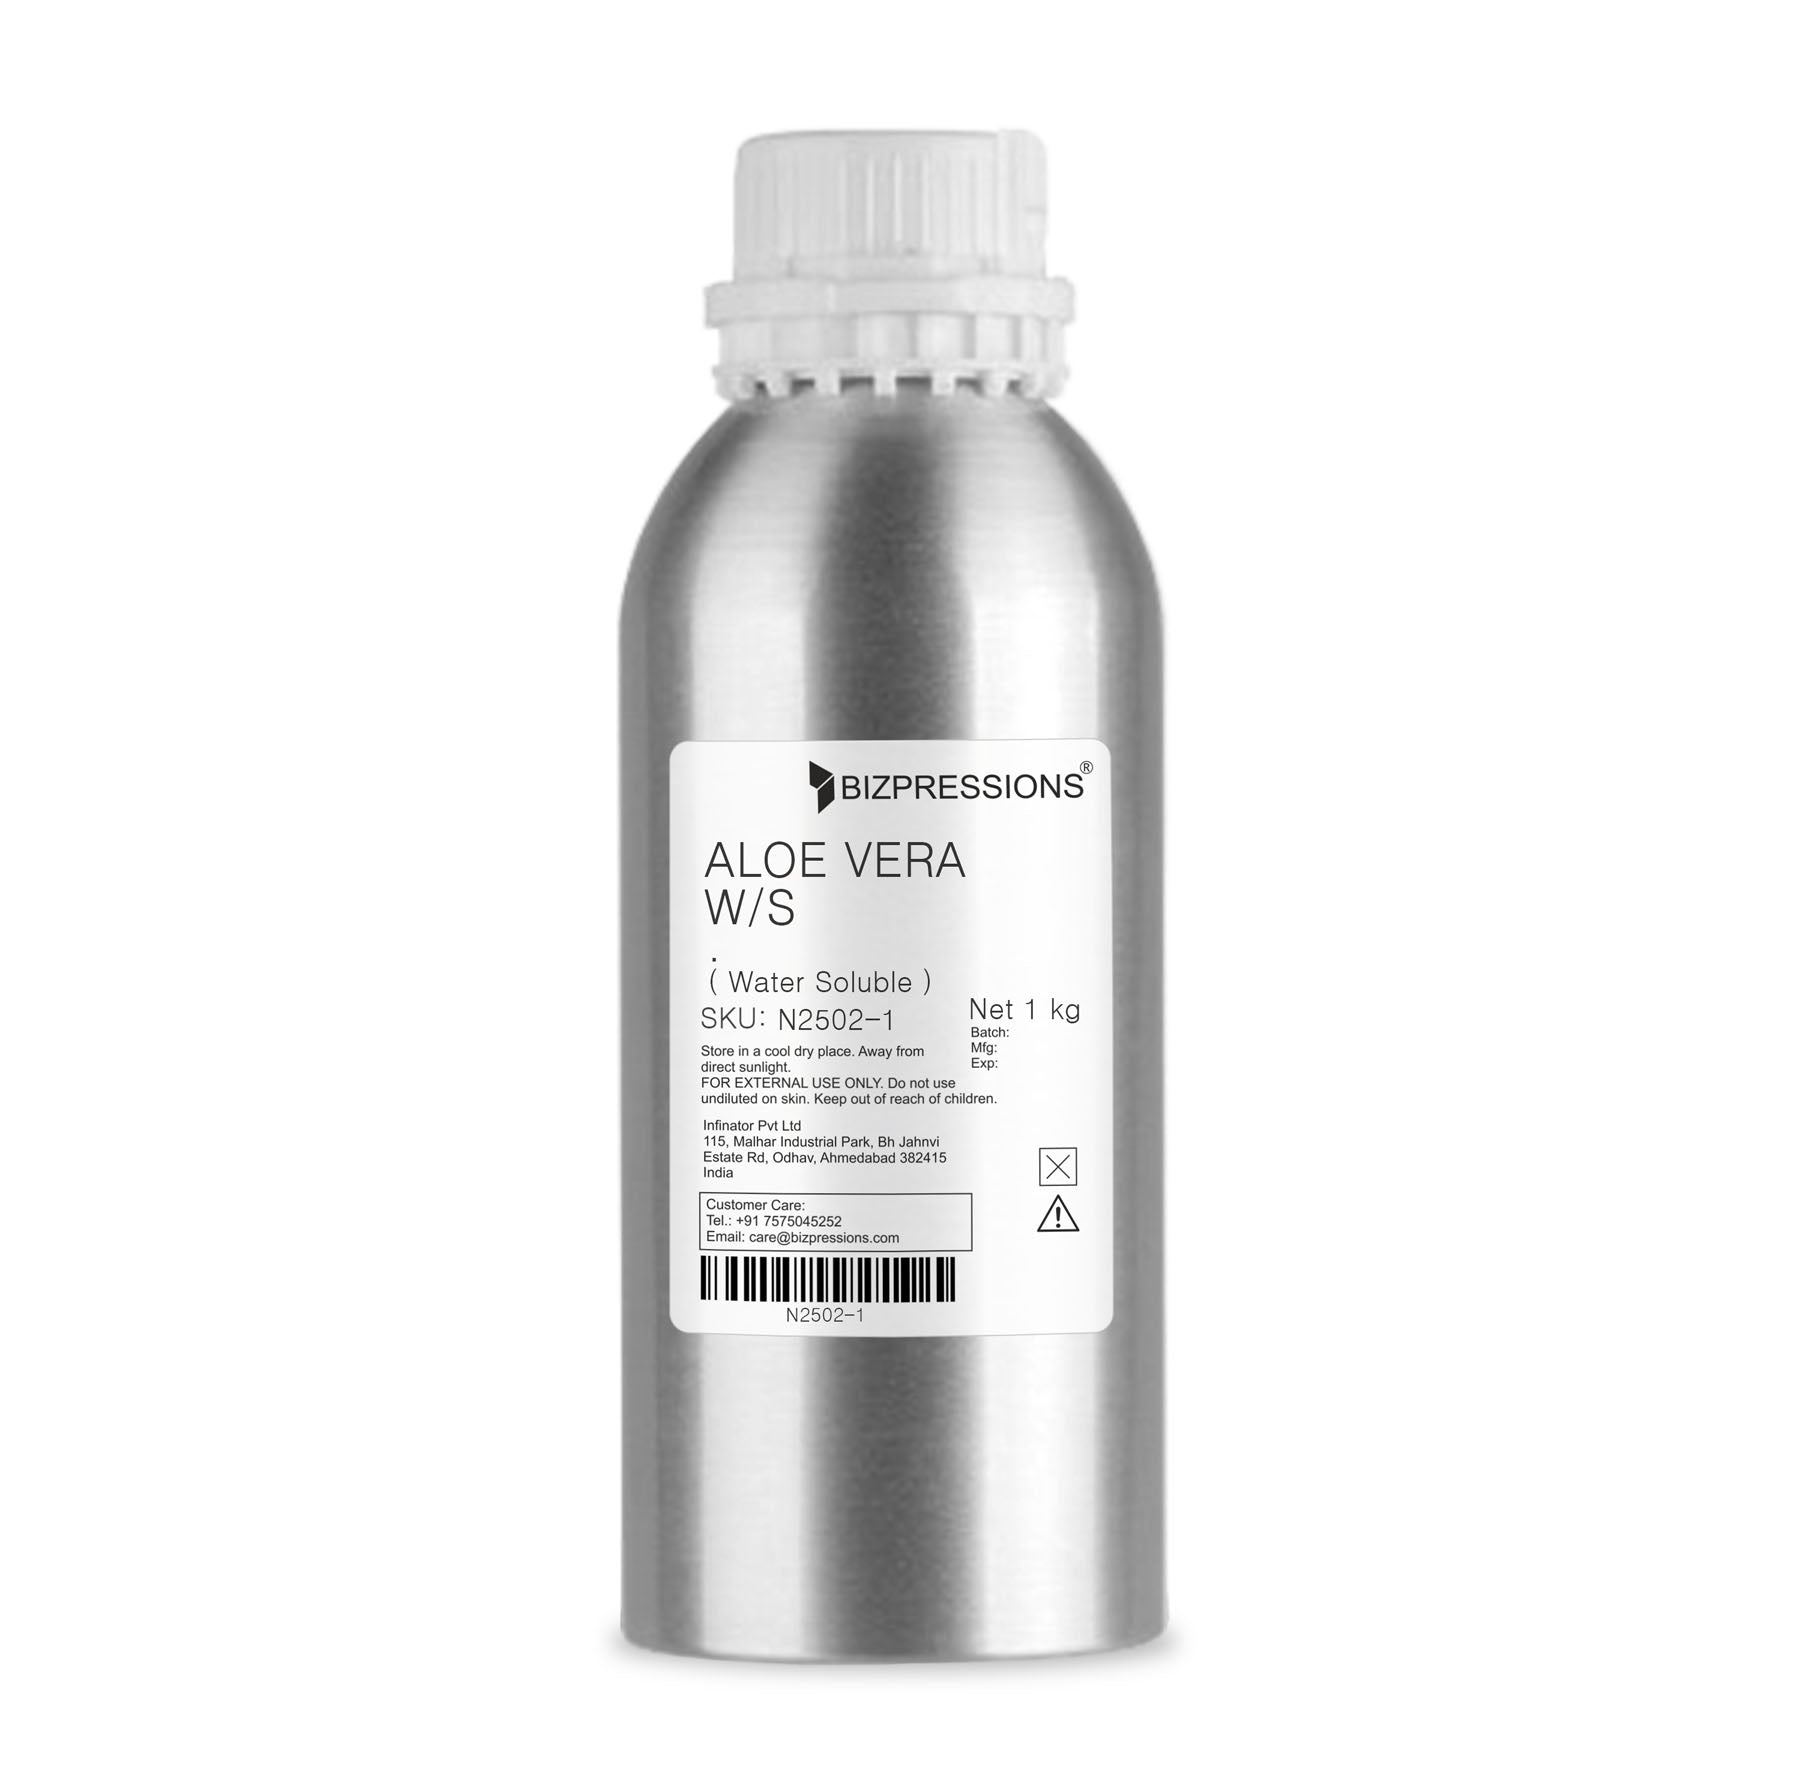 ALOE VERA W/S - Fragrance ( Water Soluble ) - 1 kg